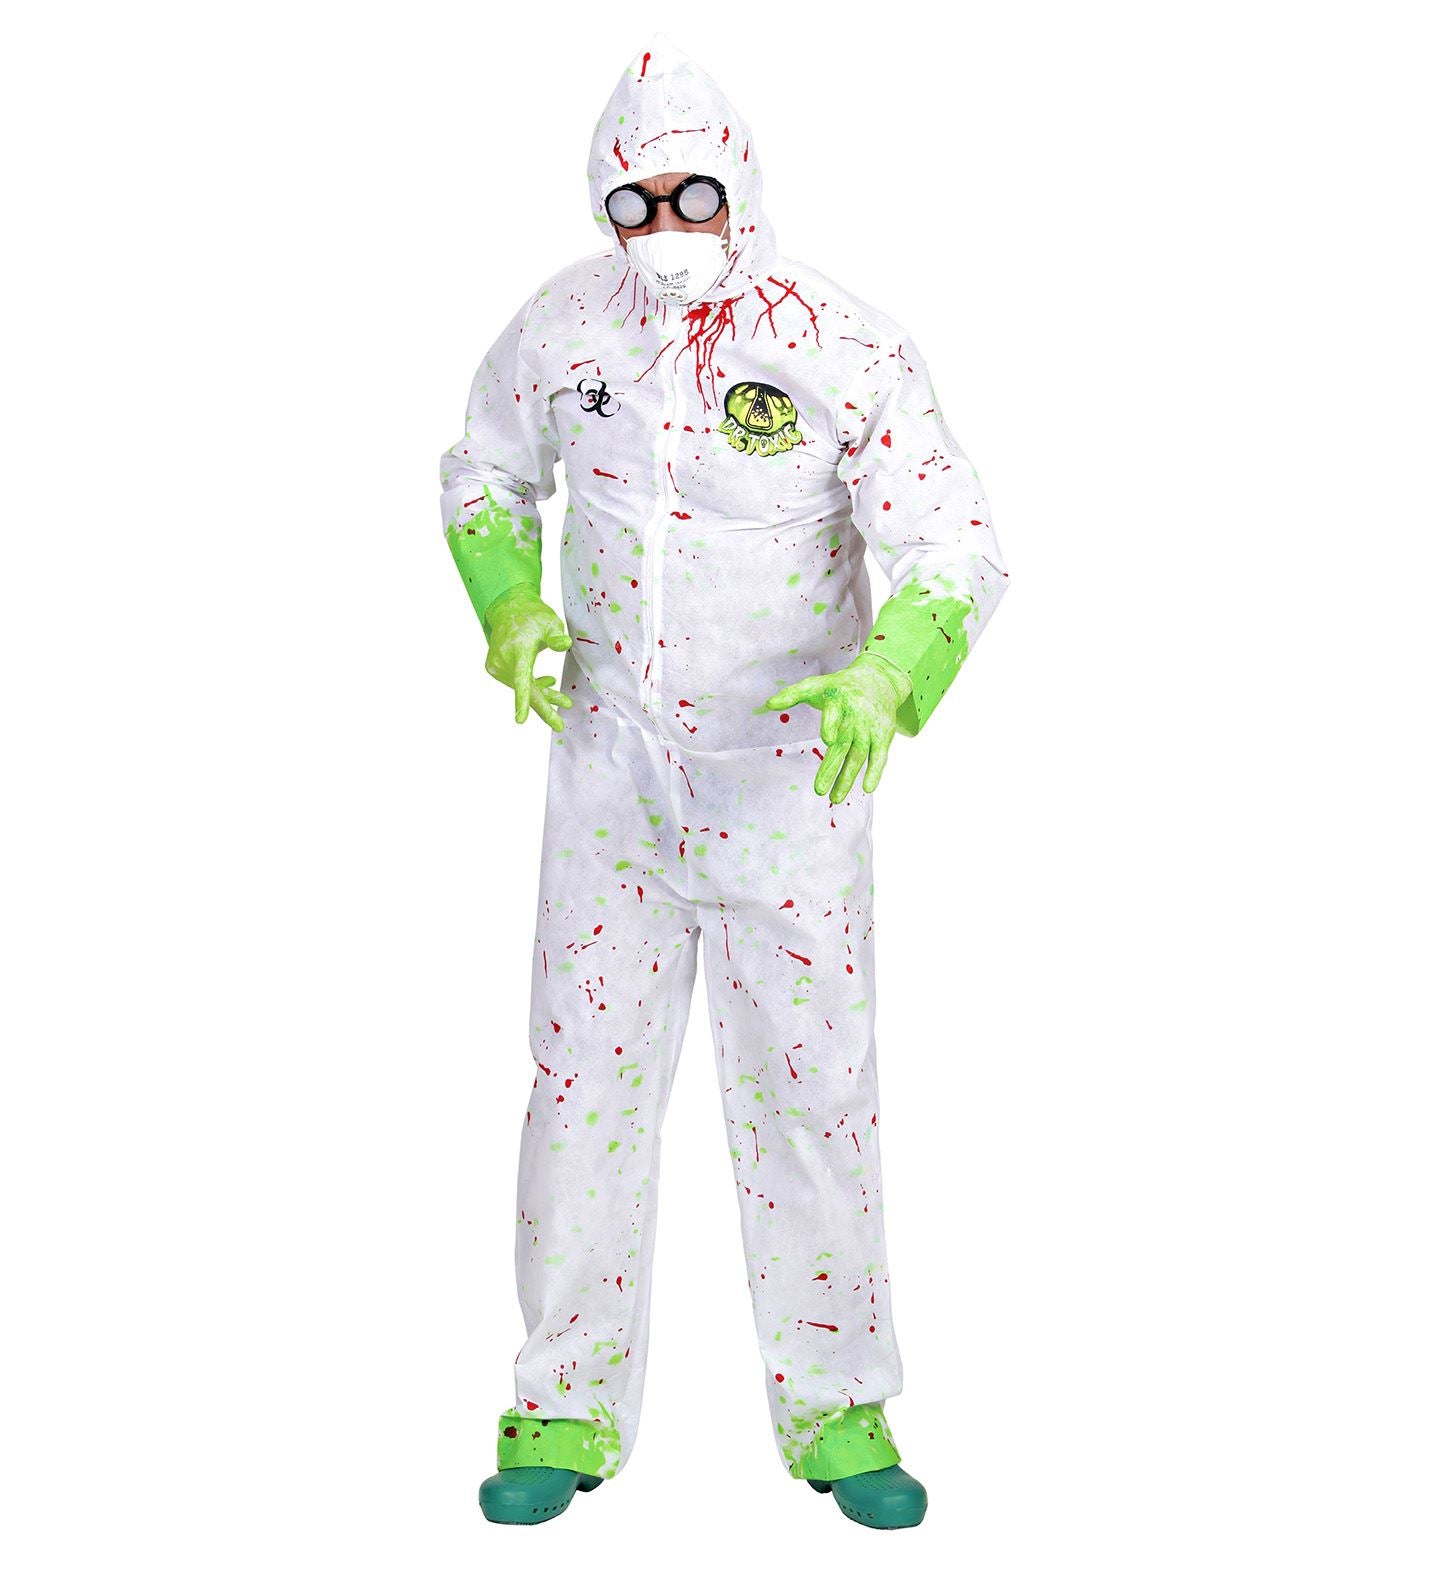 Dr Toxic Biohazard Suit Costume Adult